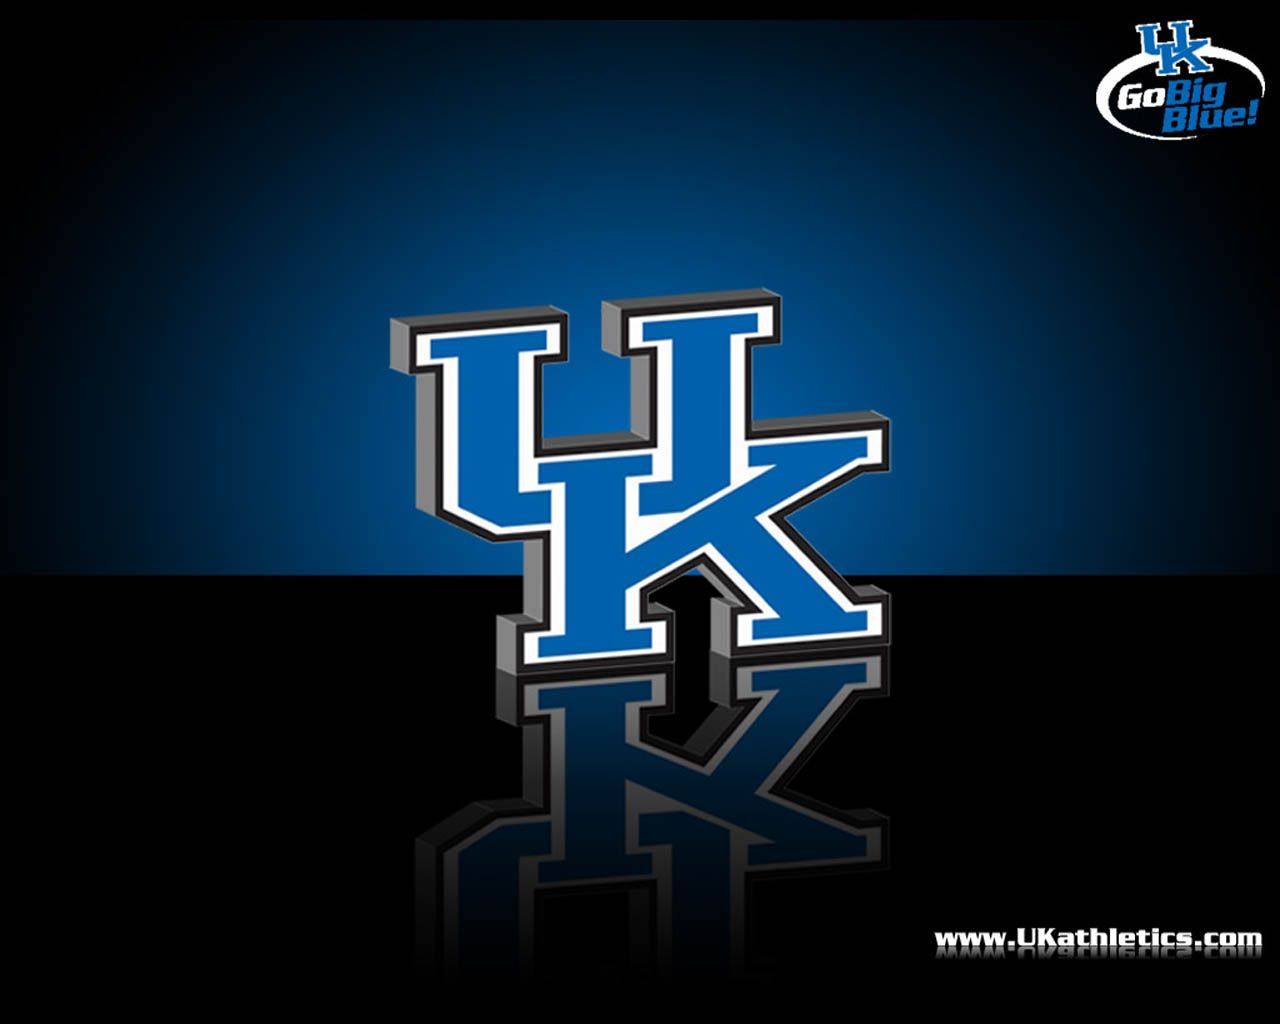 Kentucky_Wildcats_08.jpg